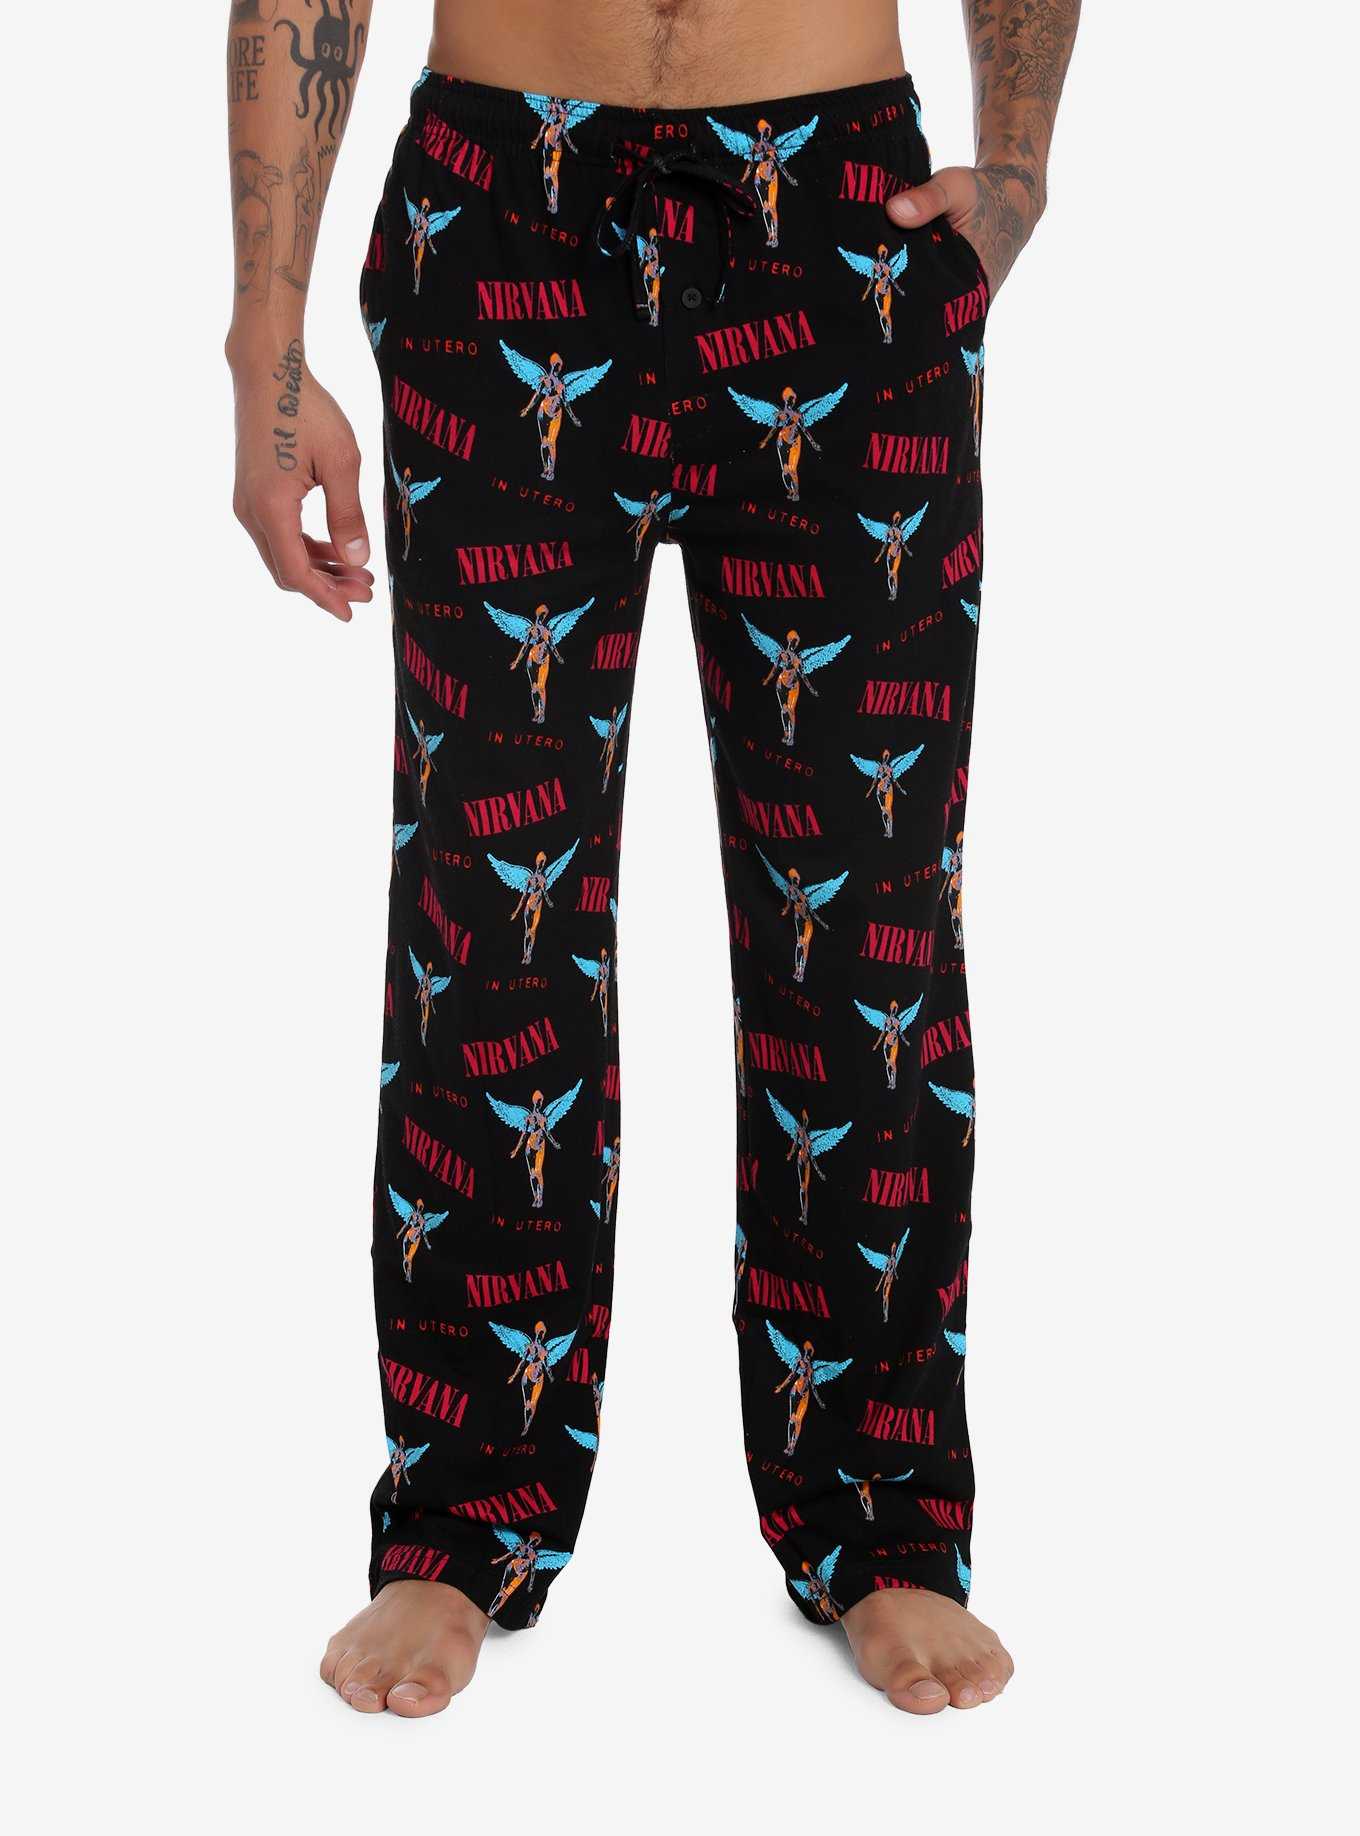 Found Bratz Pajama pants, t-shirt, and sweatpants at Walmart! : r